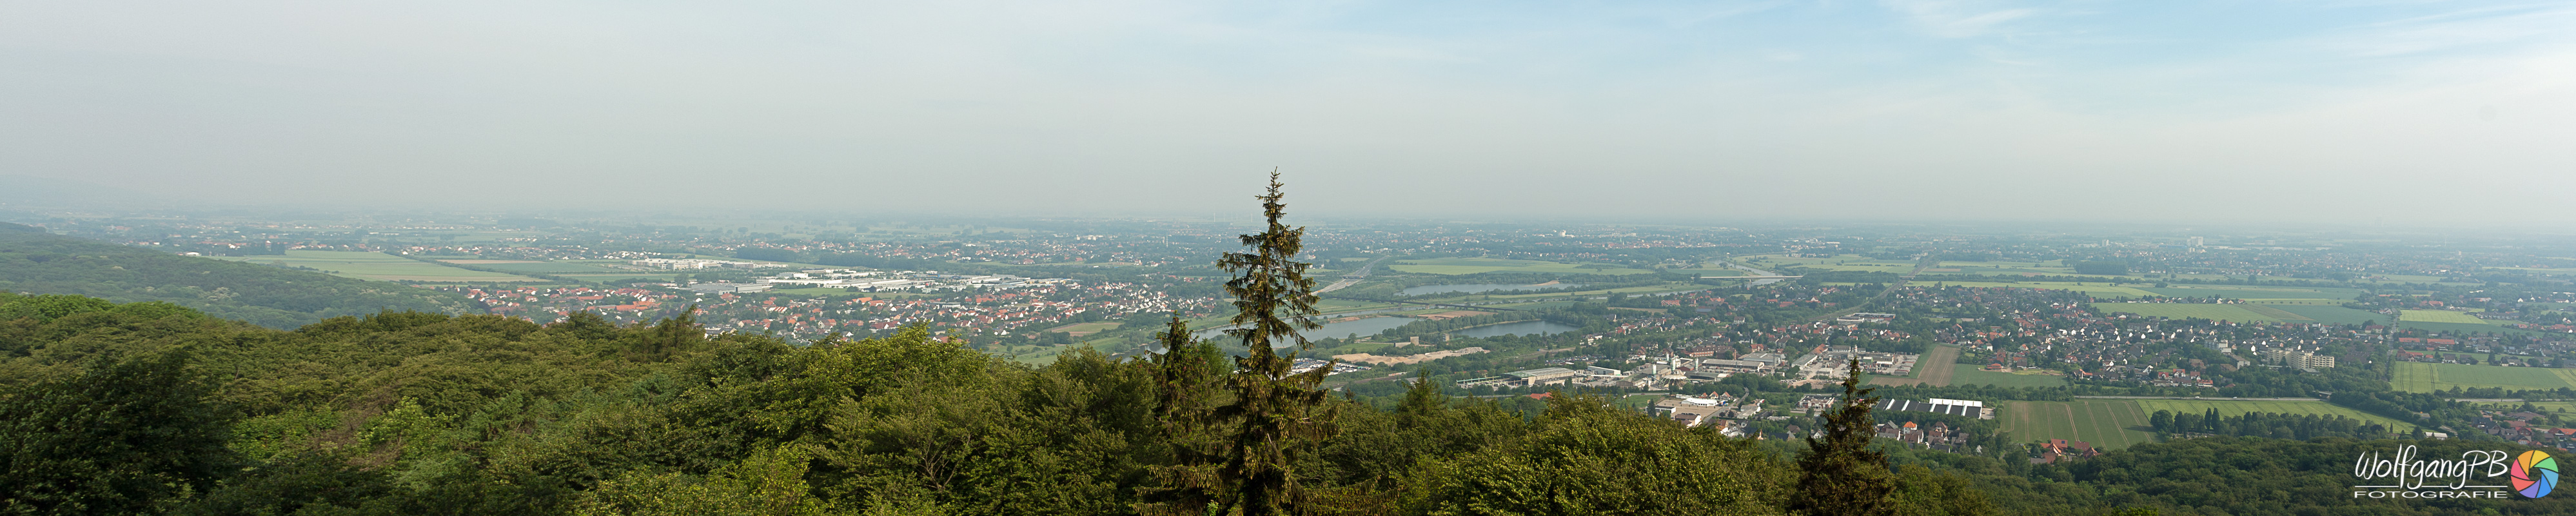 Panorama Porta Westfalica, Bild 004